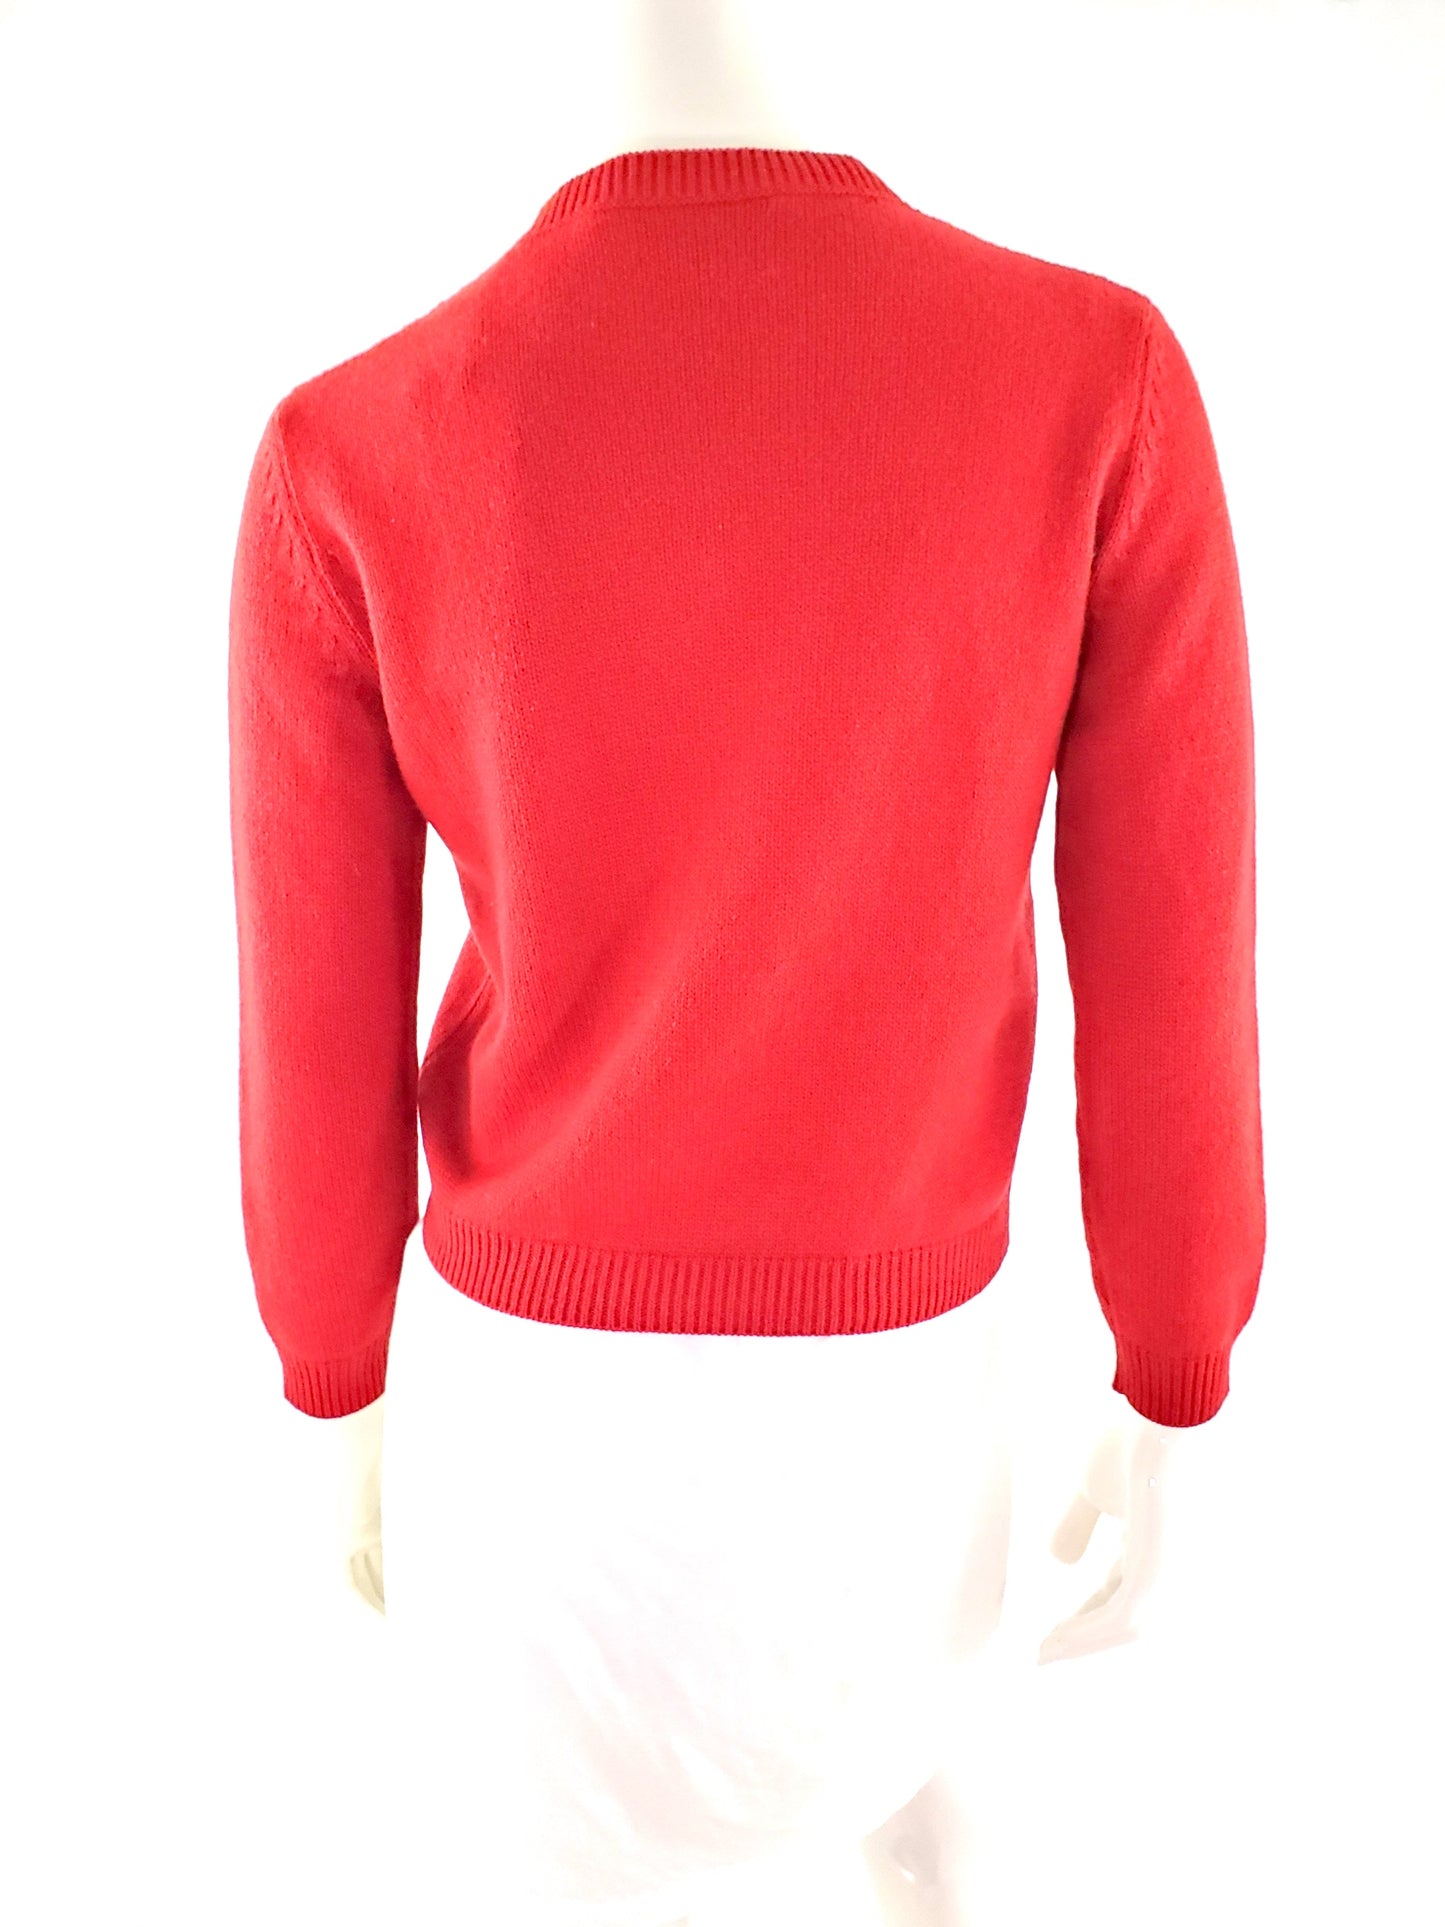 New Gucci 2017 Red UFO Intarsia Printed Wool Sweater S